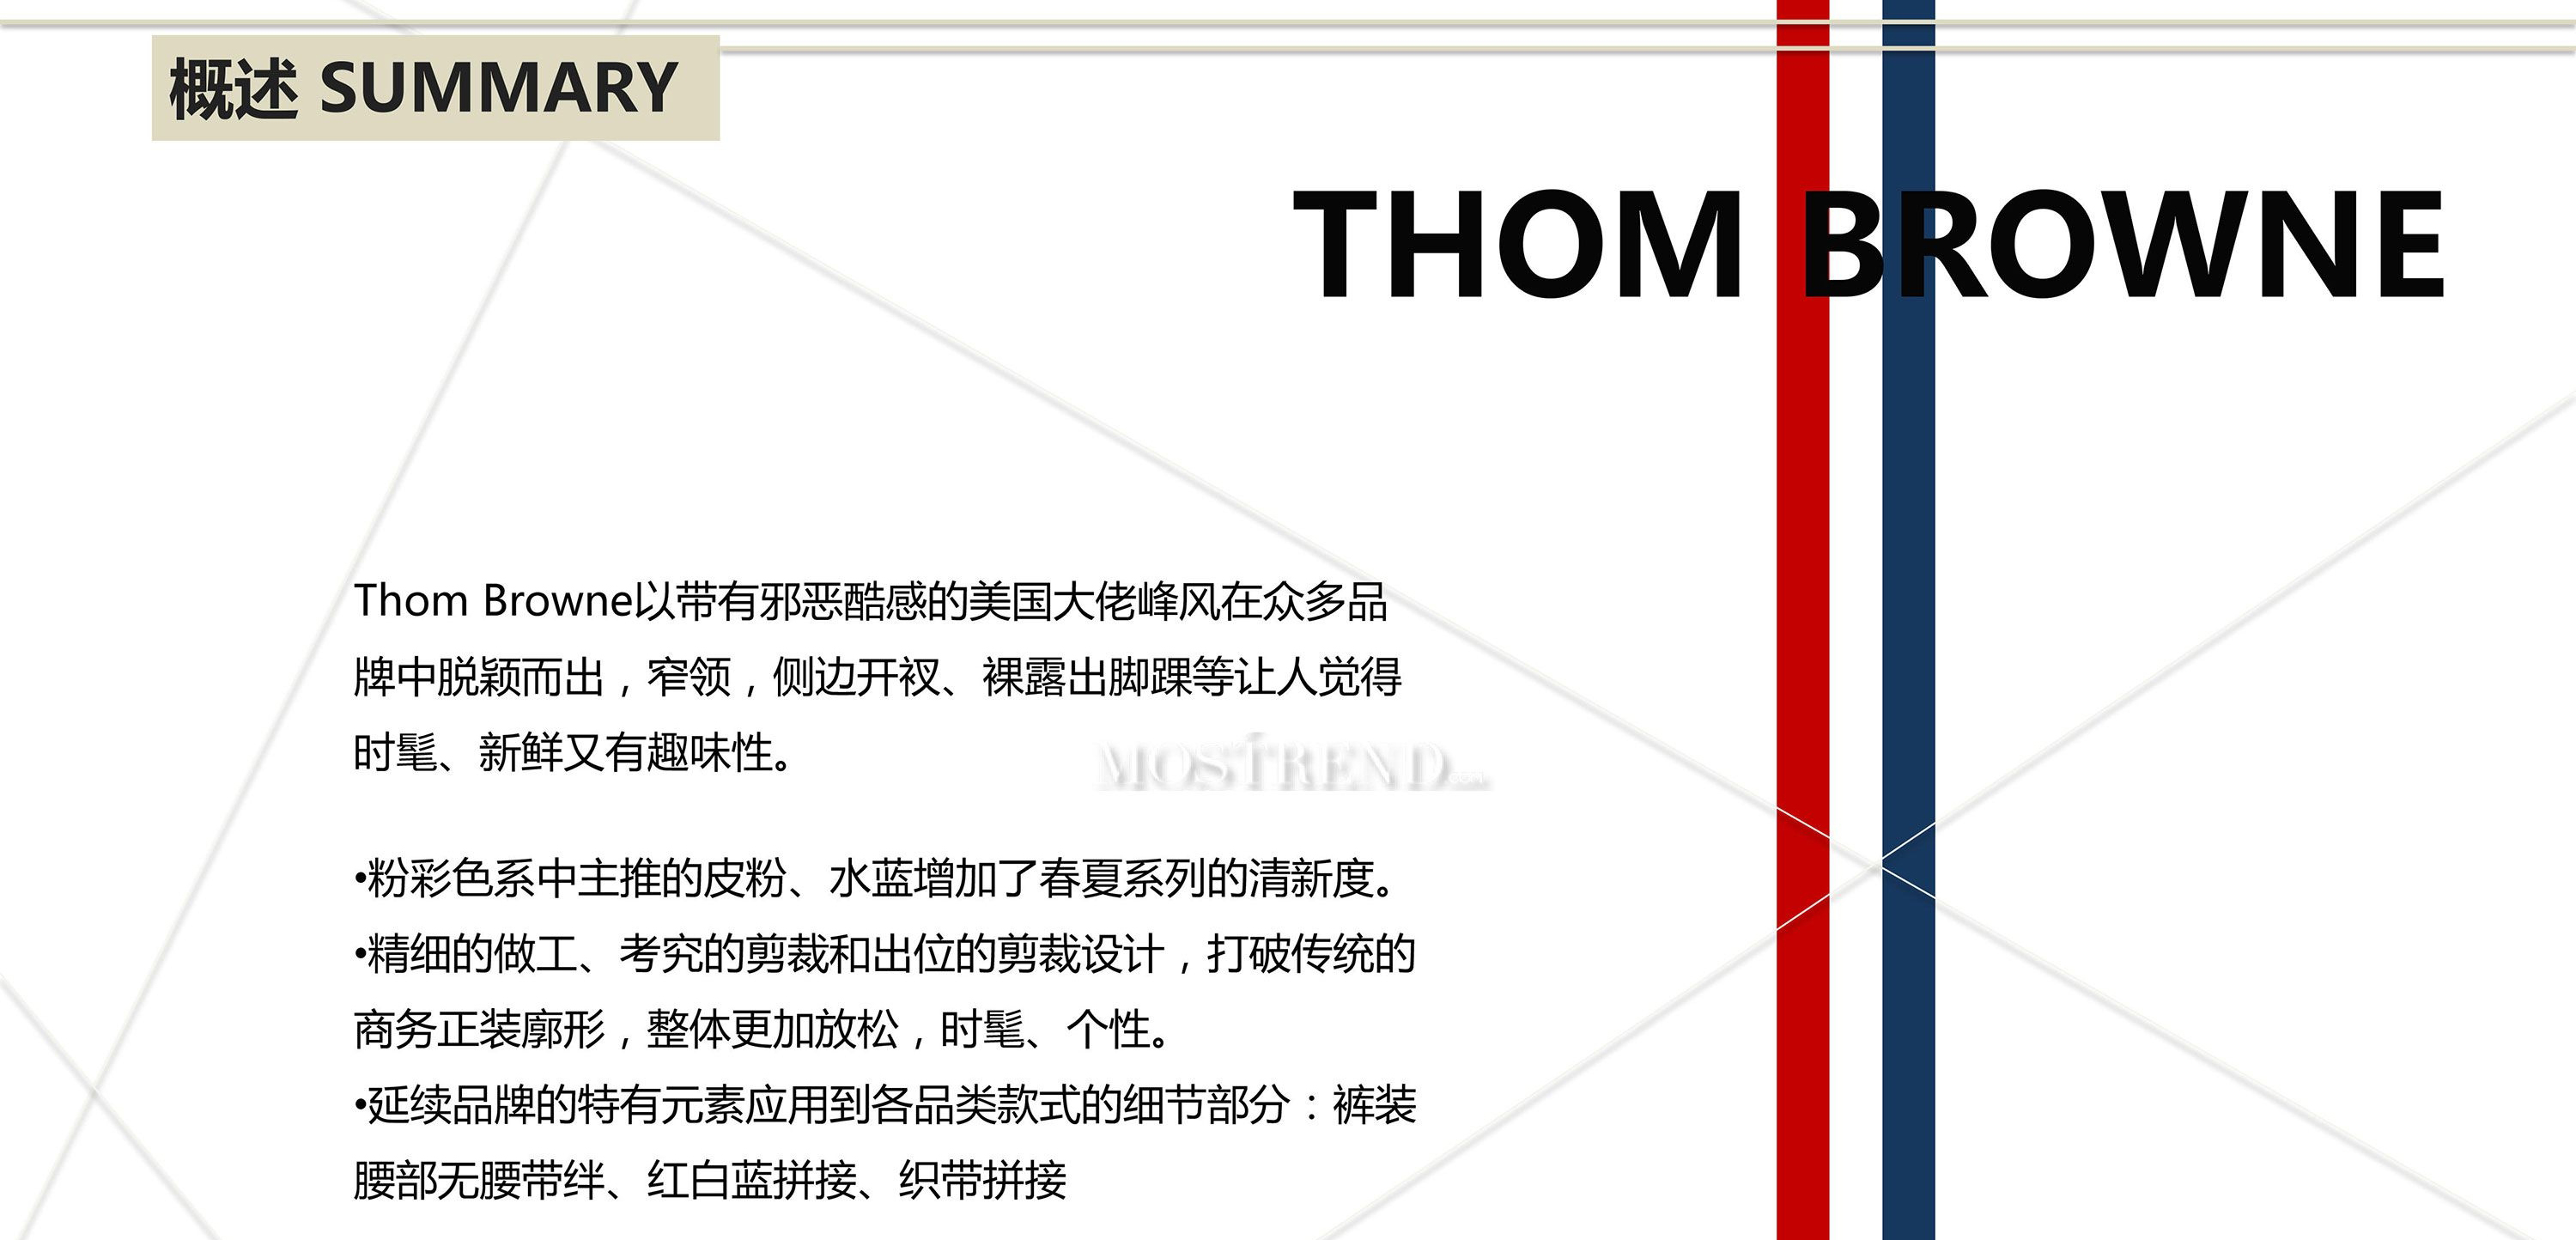 Thom Browne汤姆布朗品牌服装 汤姆布朗奢侈名品服装 高仿复刻汤姆布朗服装品牌专区-奢品服装网